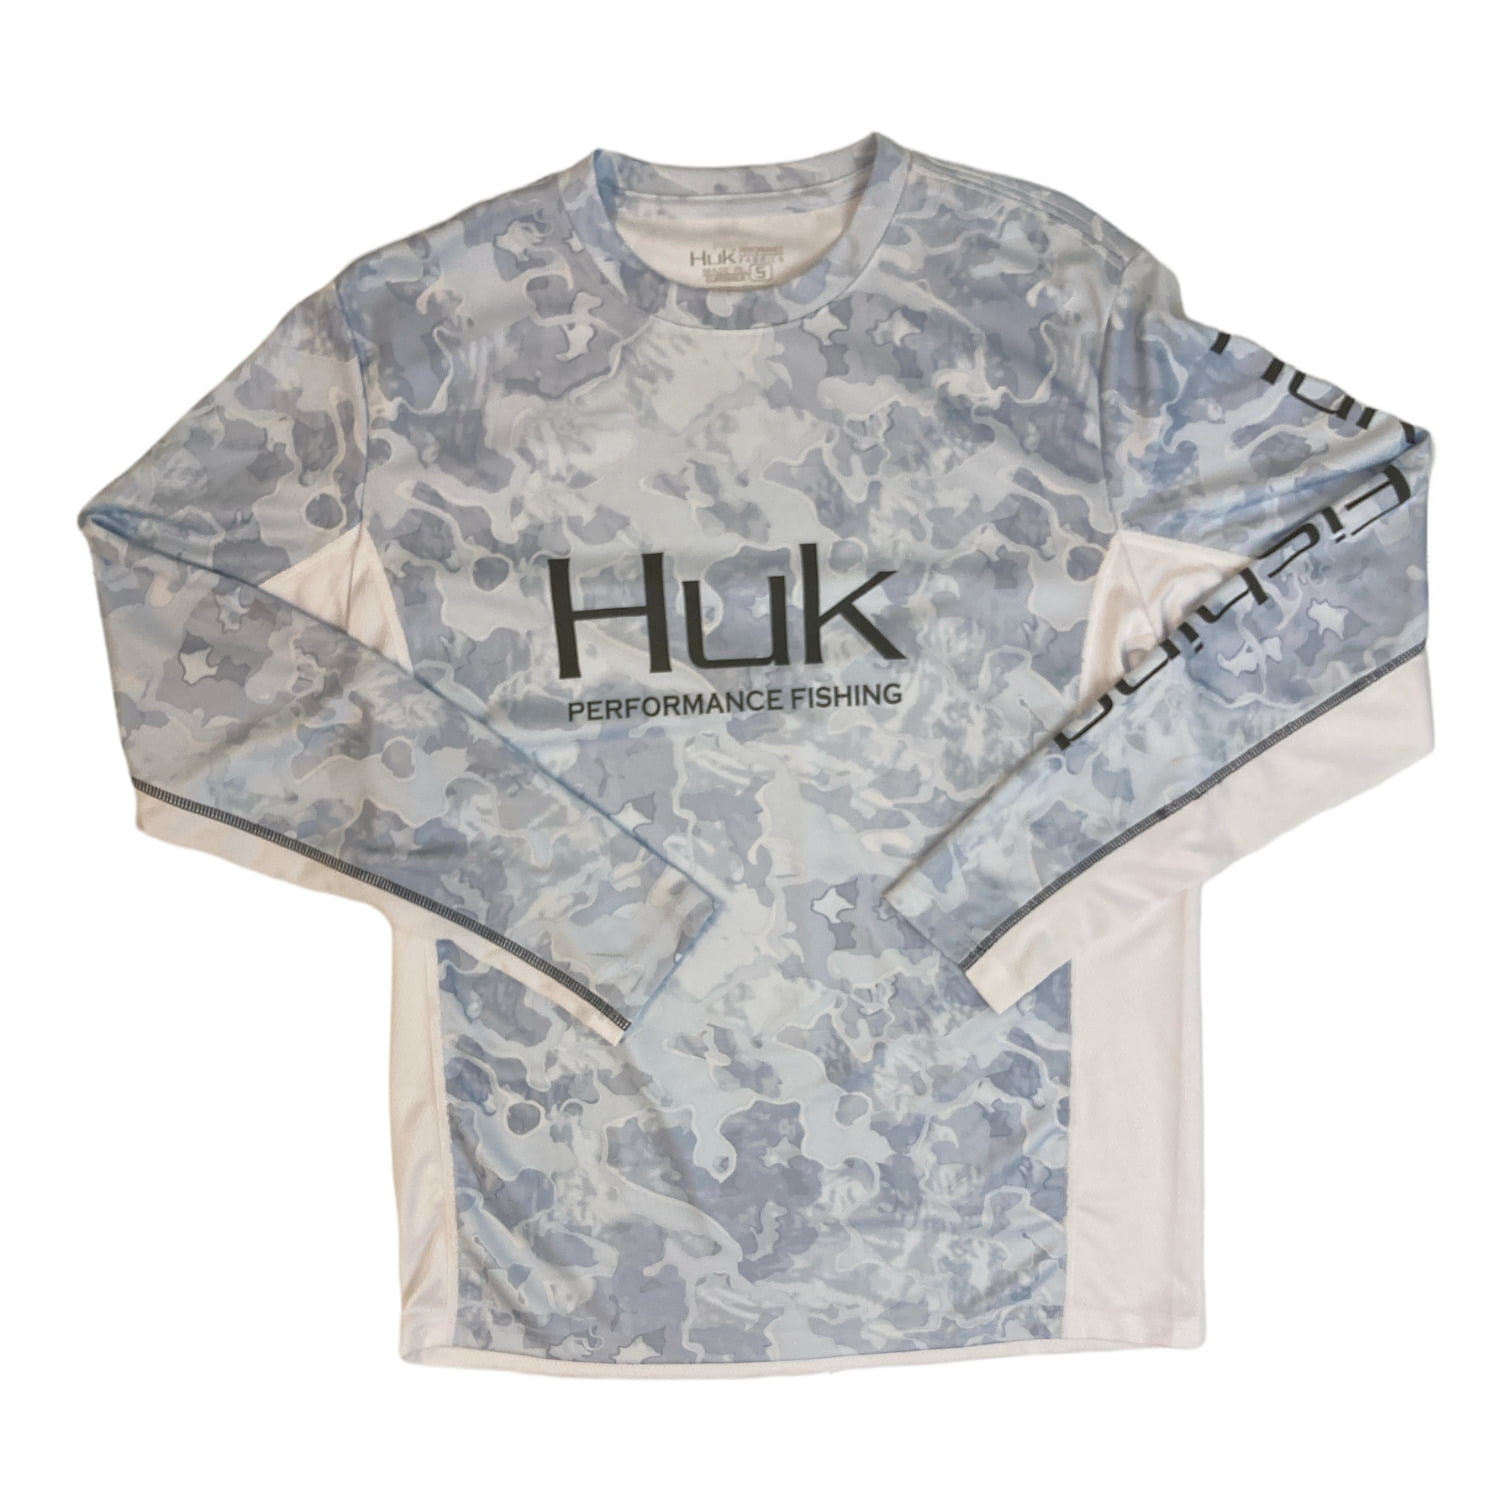 Huk Men's Icon X Performance Long Sleeve Fishing Shirt (Grey Drift